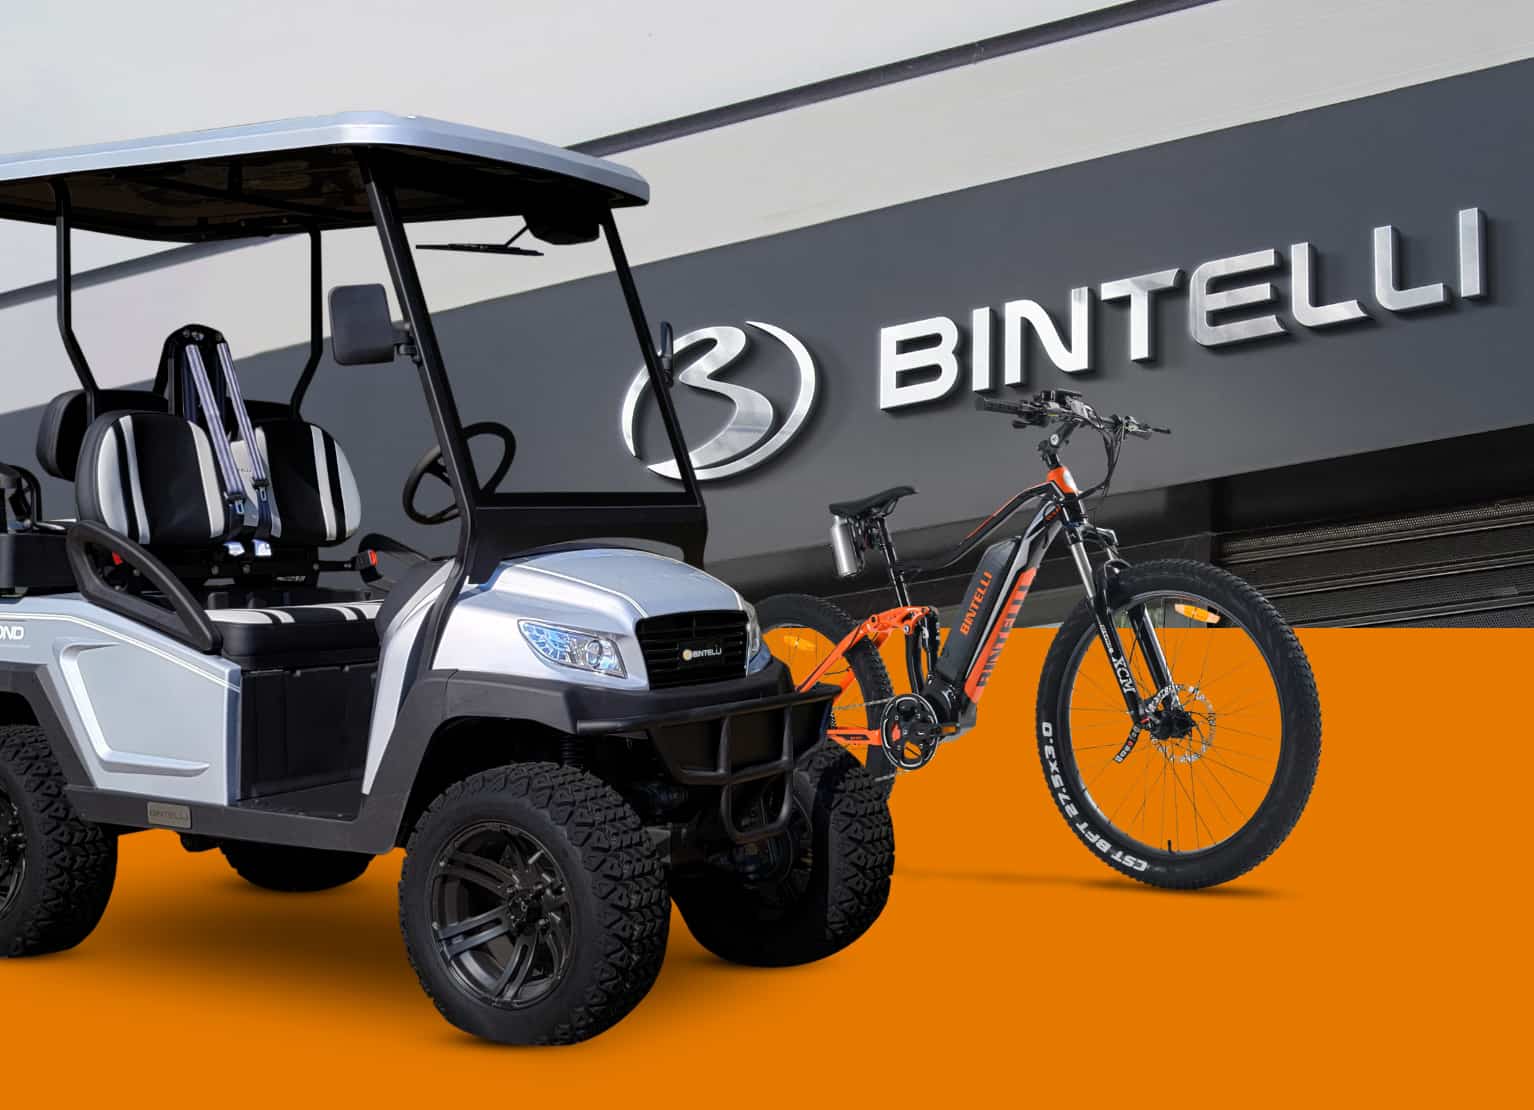 Best Dealers for EVS, Ebikes, Mobile Bintelli & Golf Carts